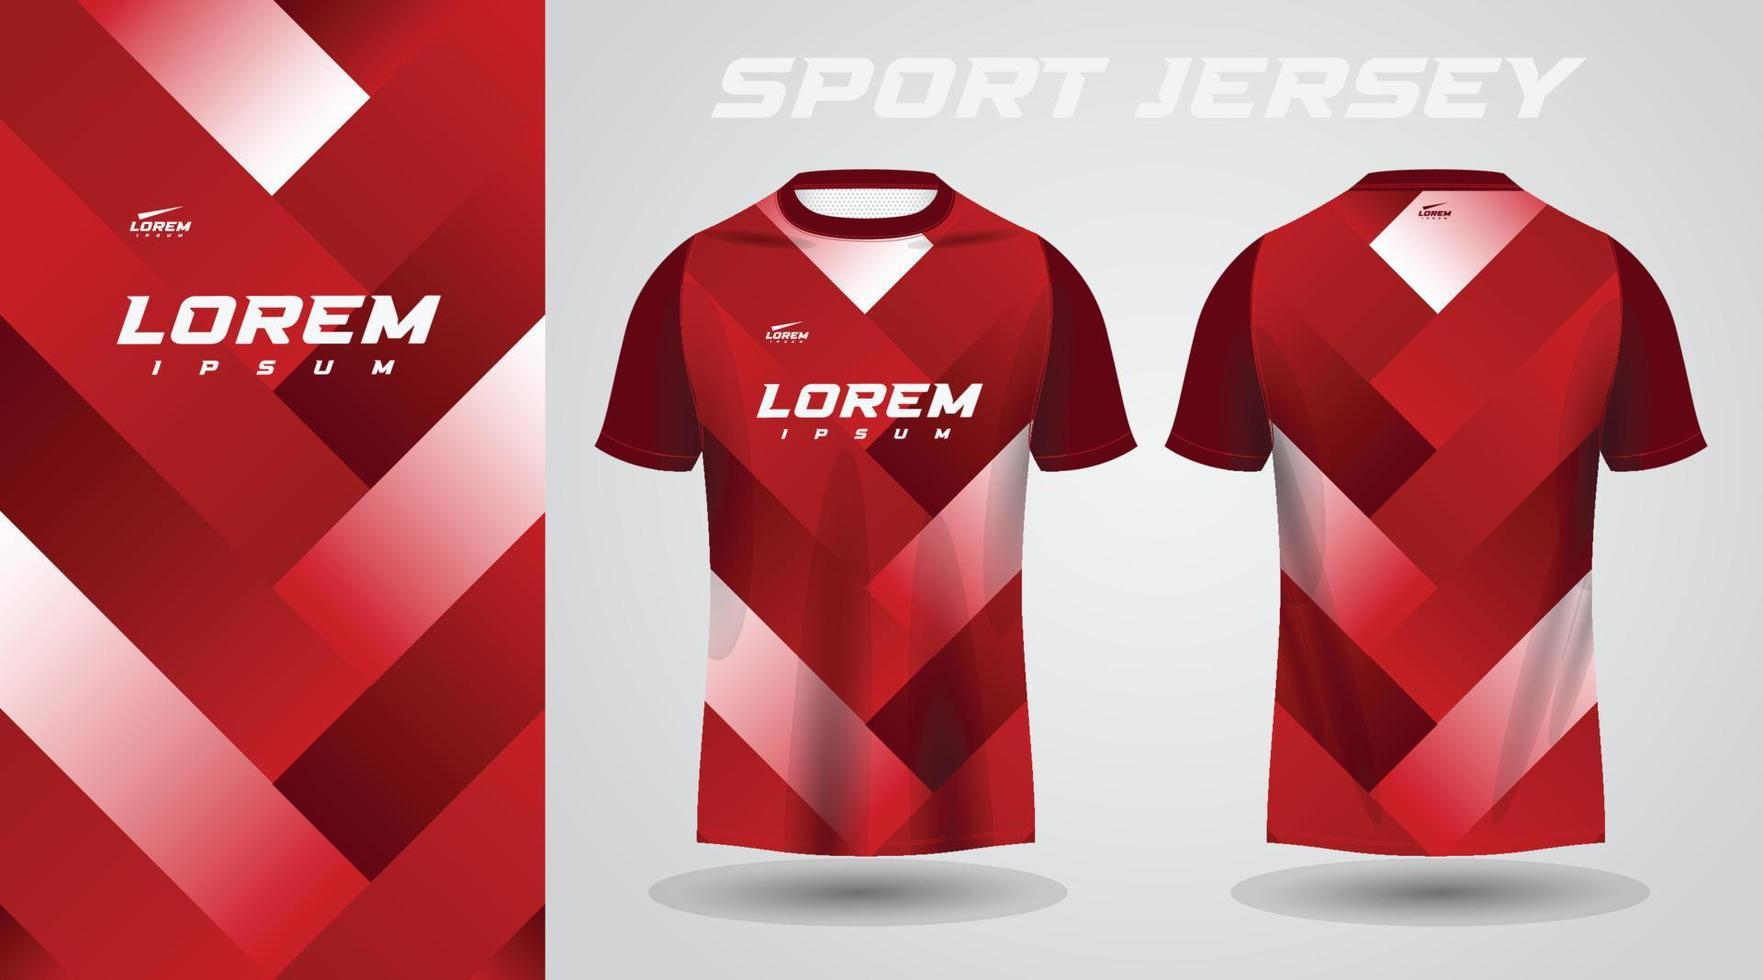 rood wit shirt sport jersey ontwerp vector